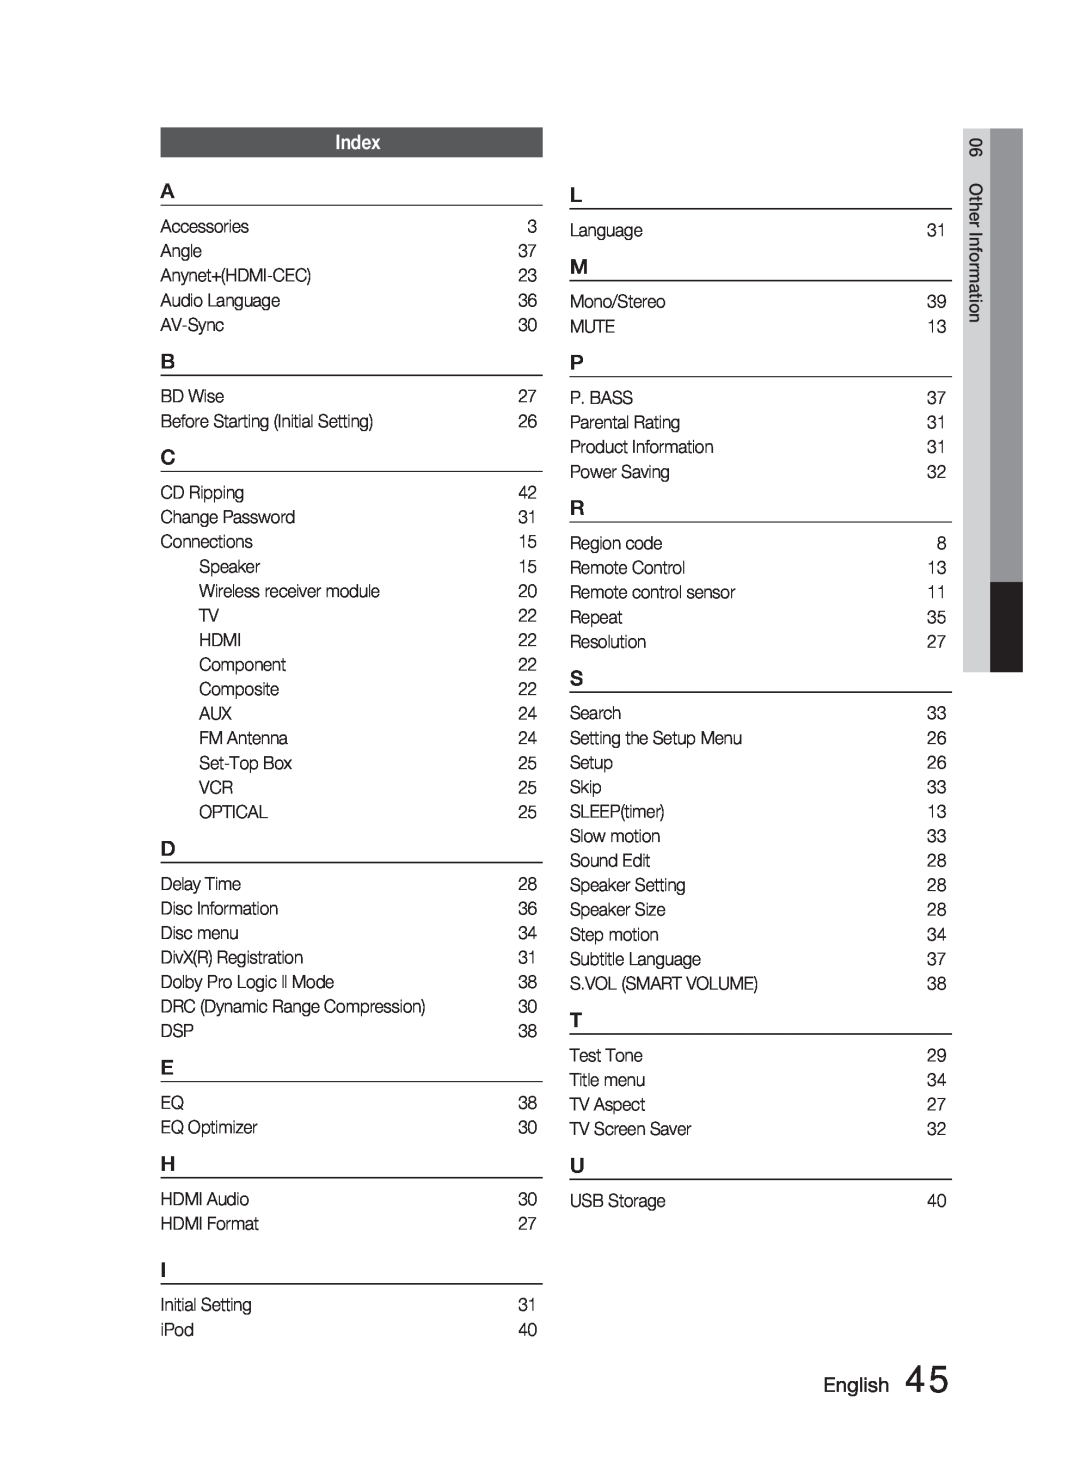 Samsung HT-C550-XAC user manual Index, English 